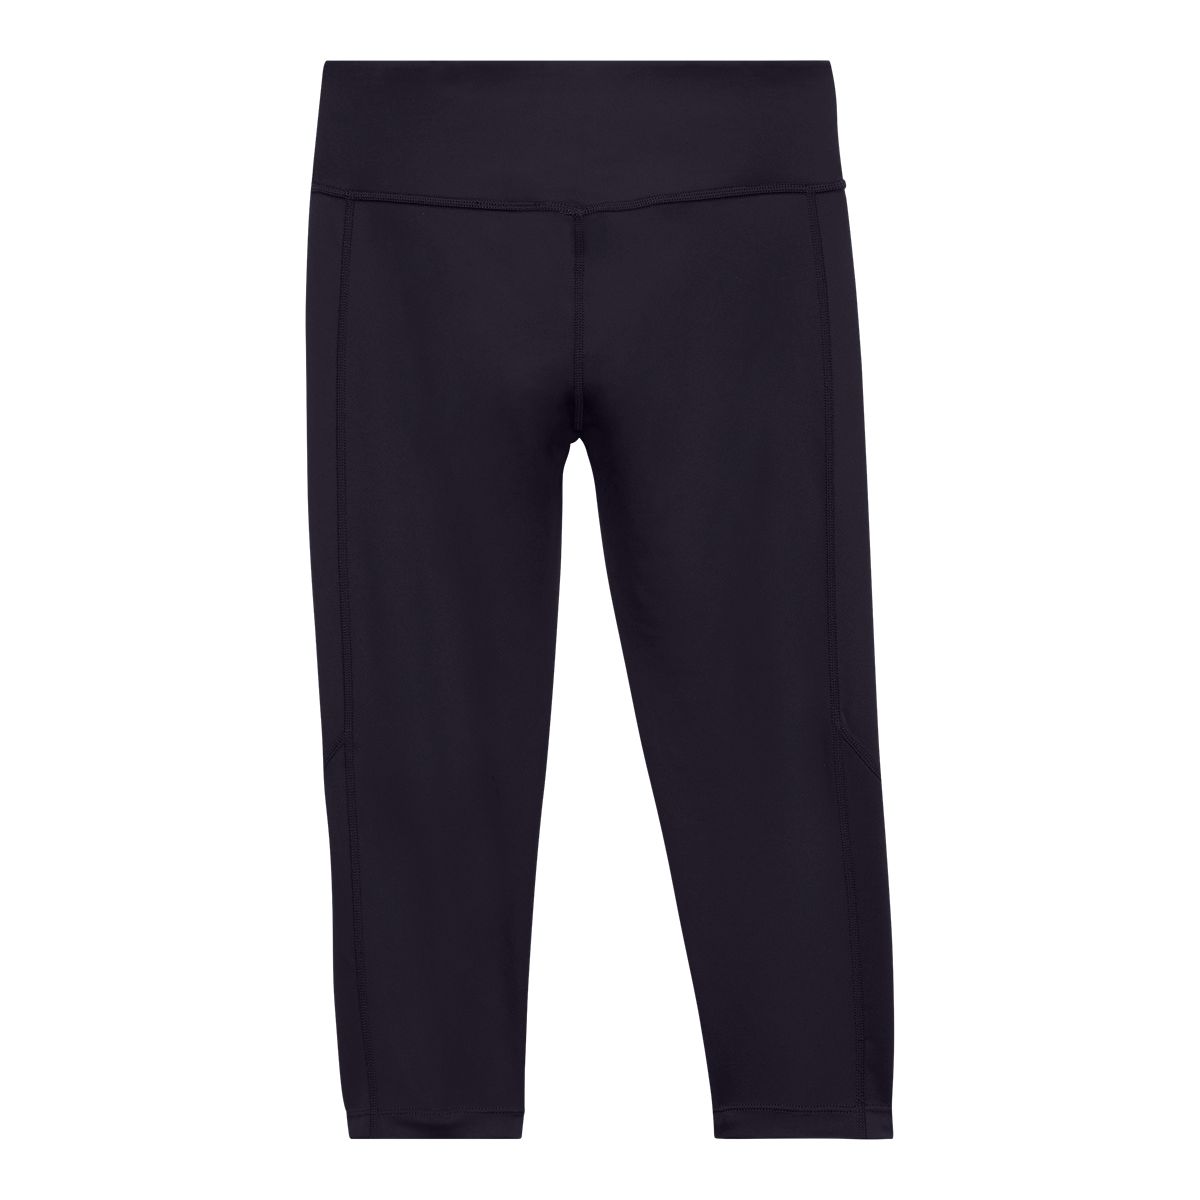 Nike Capri Pants Womens Small Loose Fit Sportswear Jersey Cotton Solid  Black